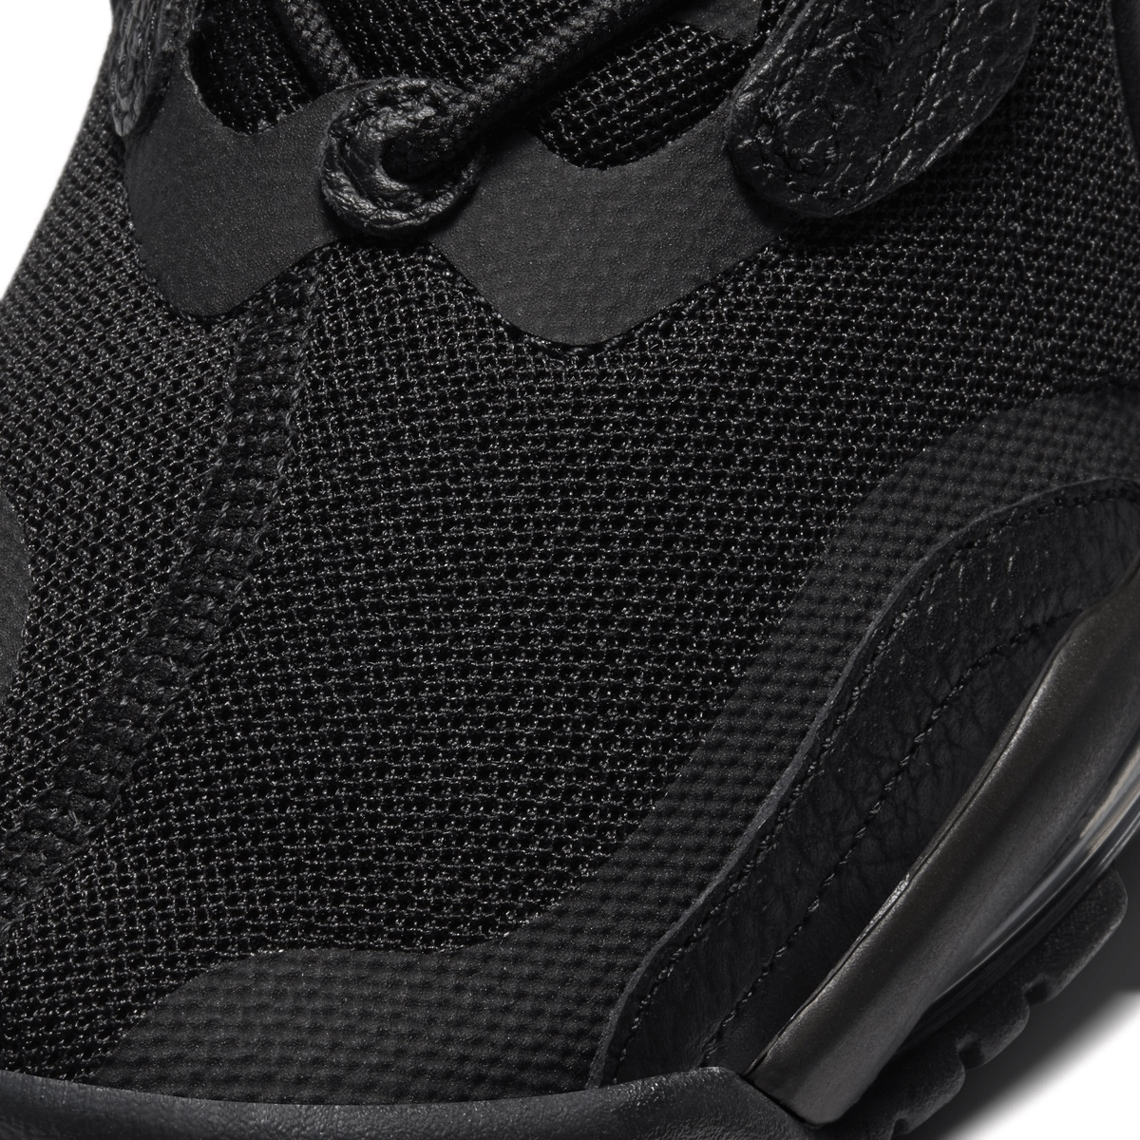 Jordan Aerospace 720 Black Leather Knit 2020 | SneakerNews.com